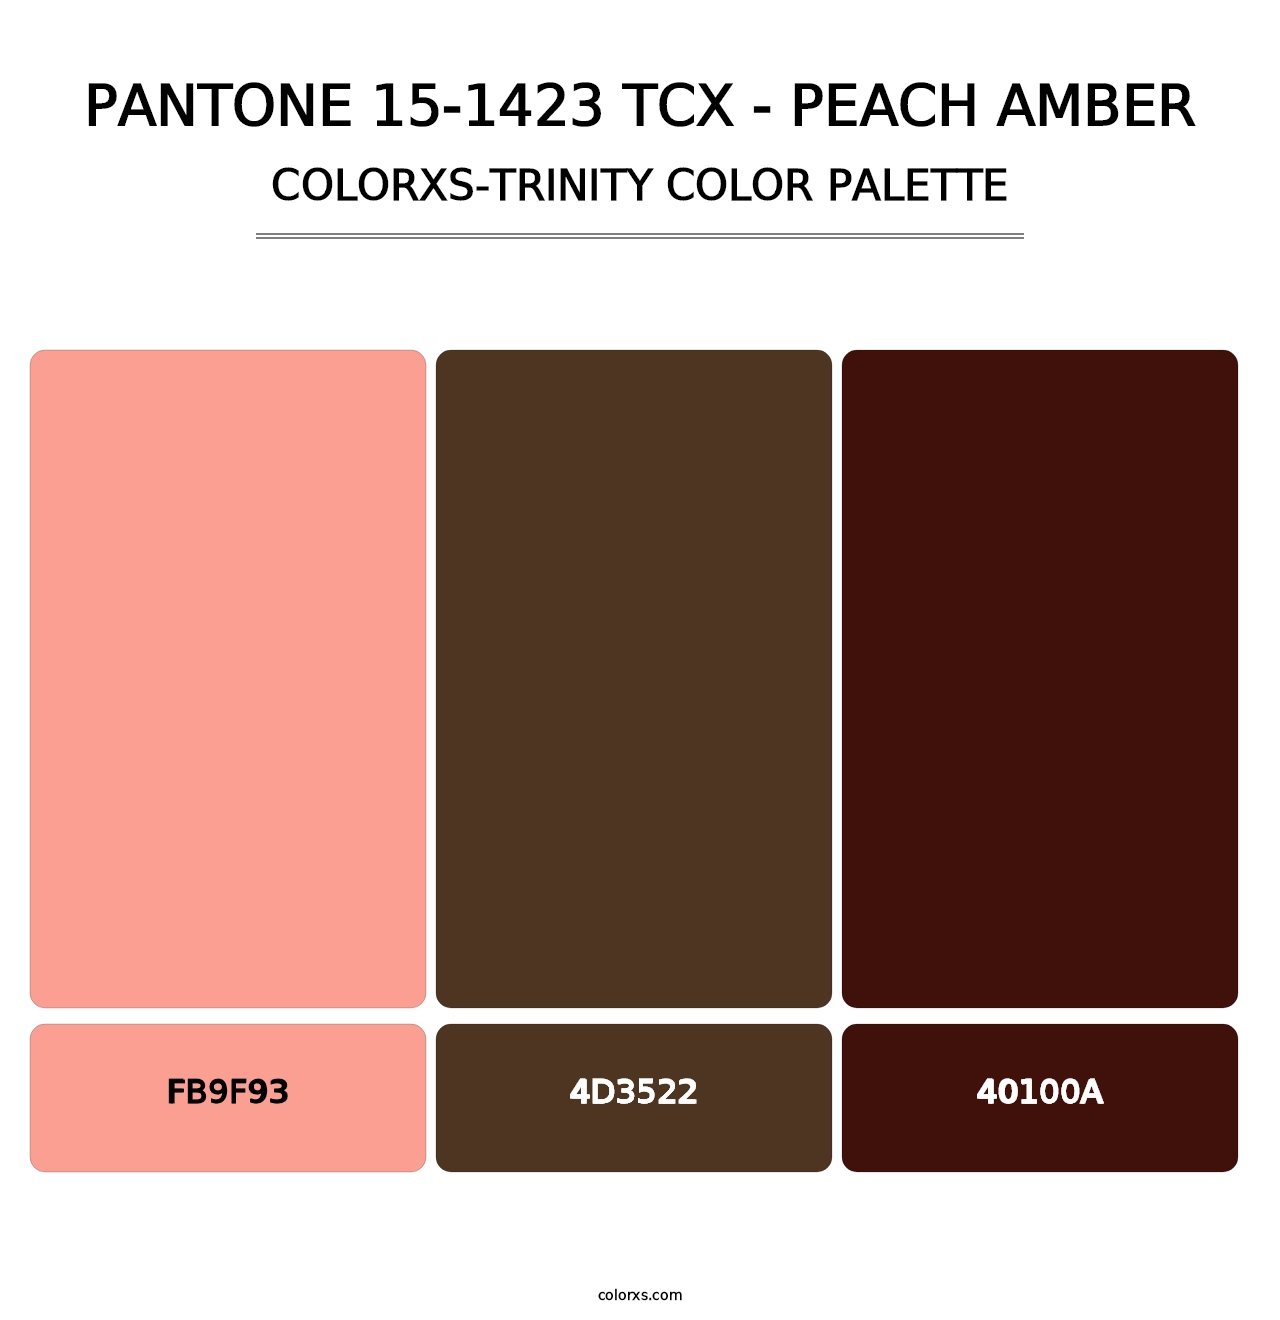 PANTONE 15-1423 TCX - Peach Amber - Colorxs Trinity Palette